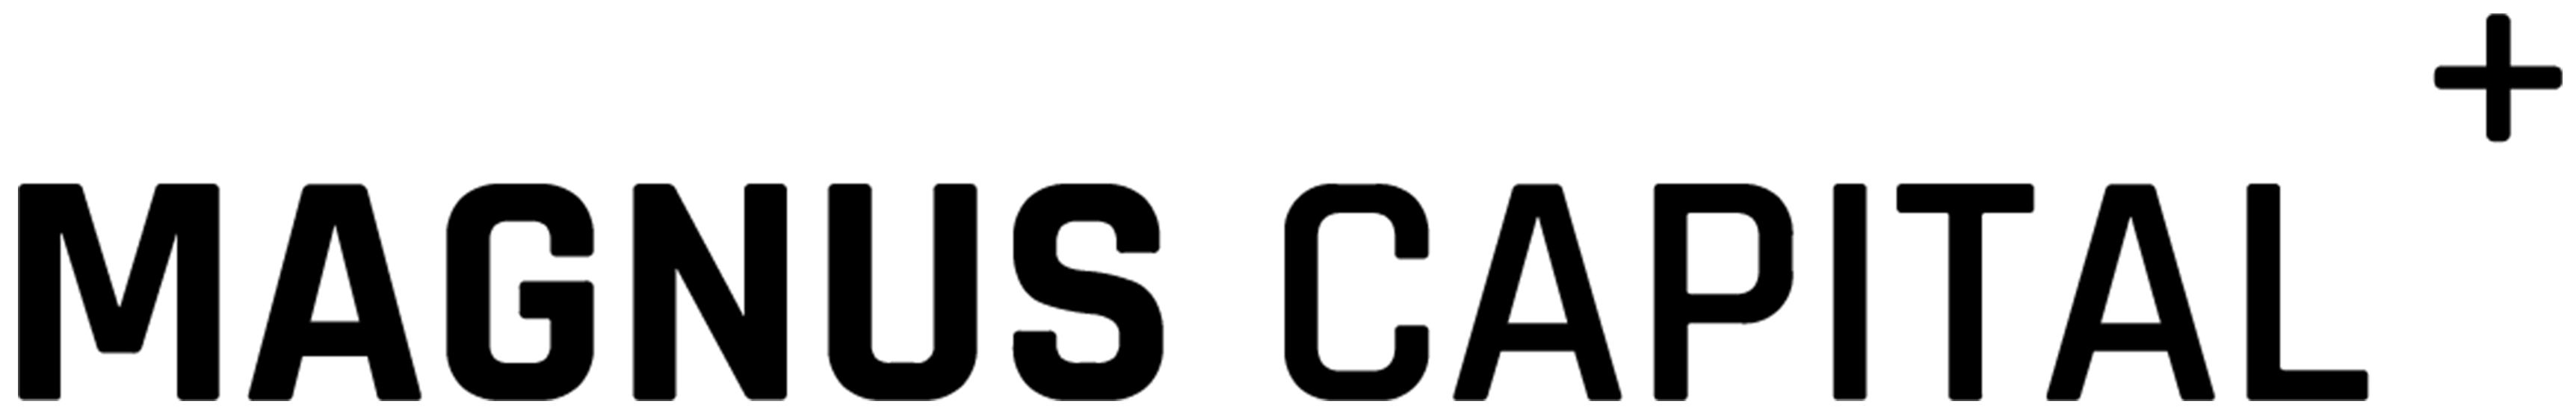 magnus capital logo3x